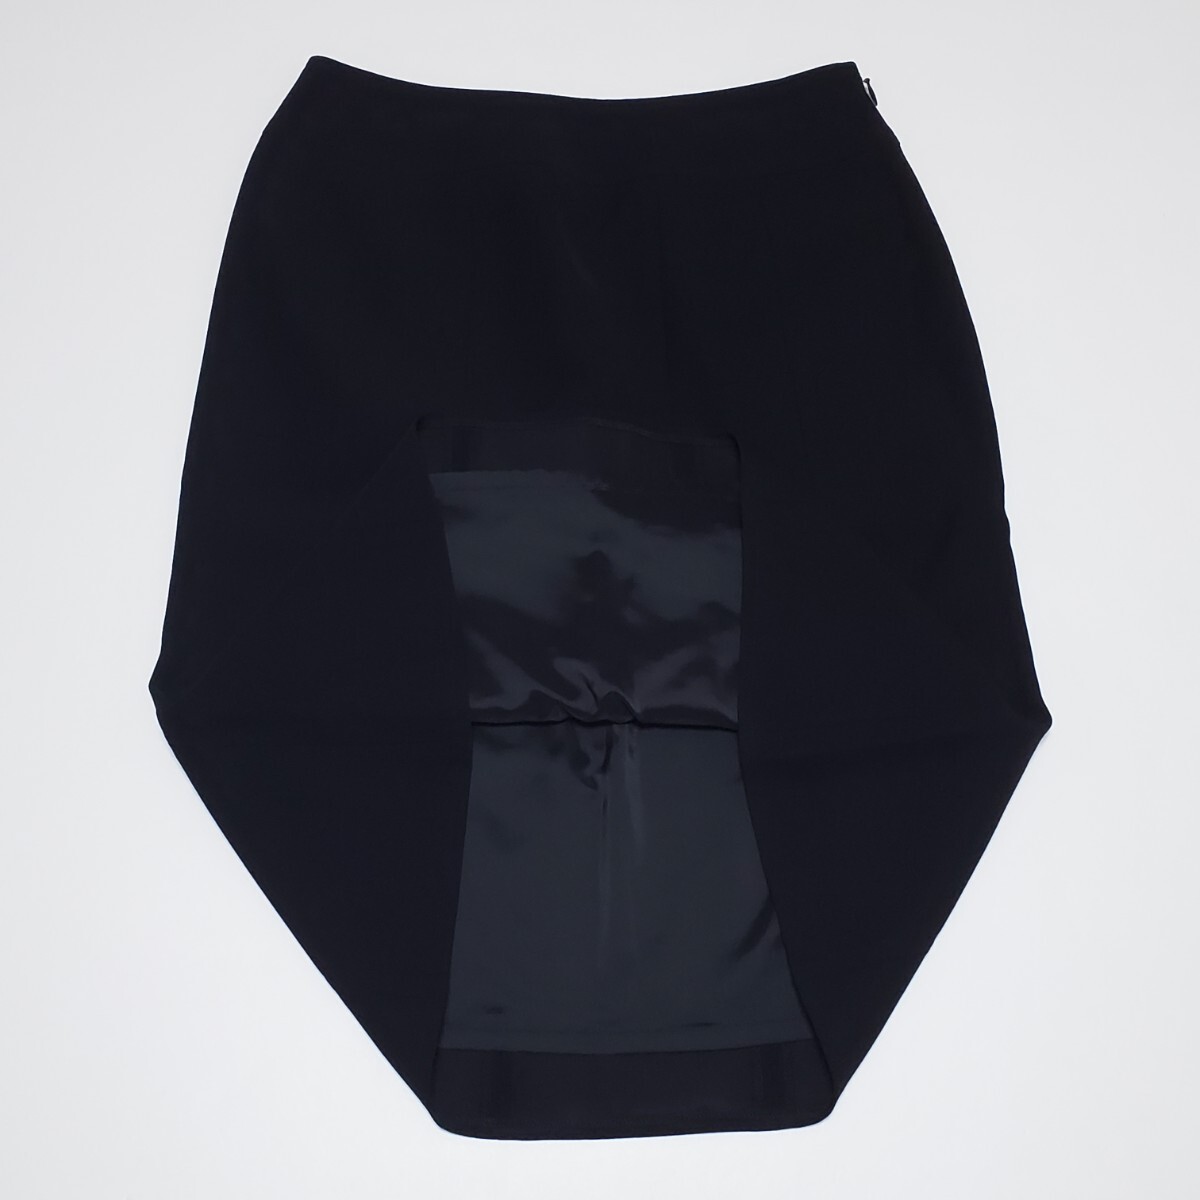 hiromichi nakano ヒロミチナカノ スカート ブラック サイズ9 タグ付き未使用品の画像8